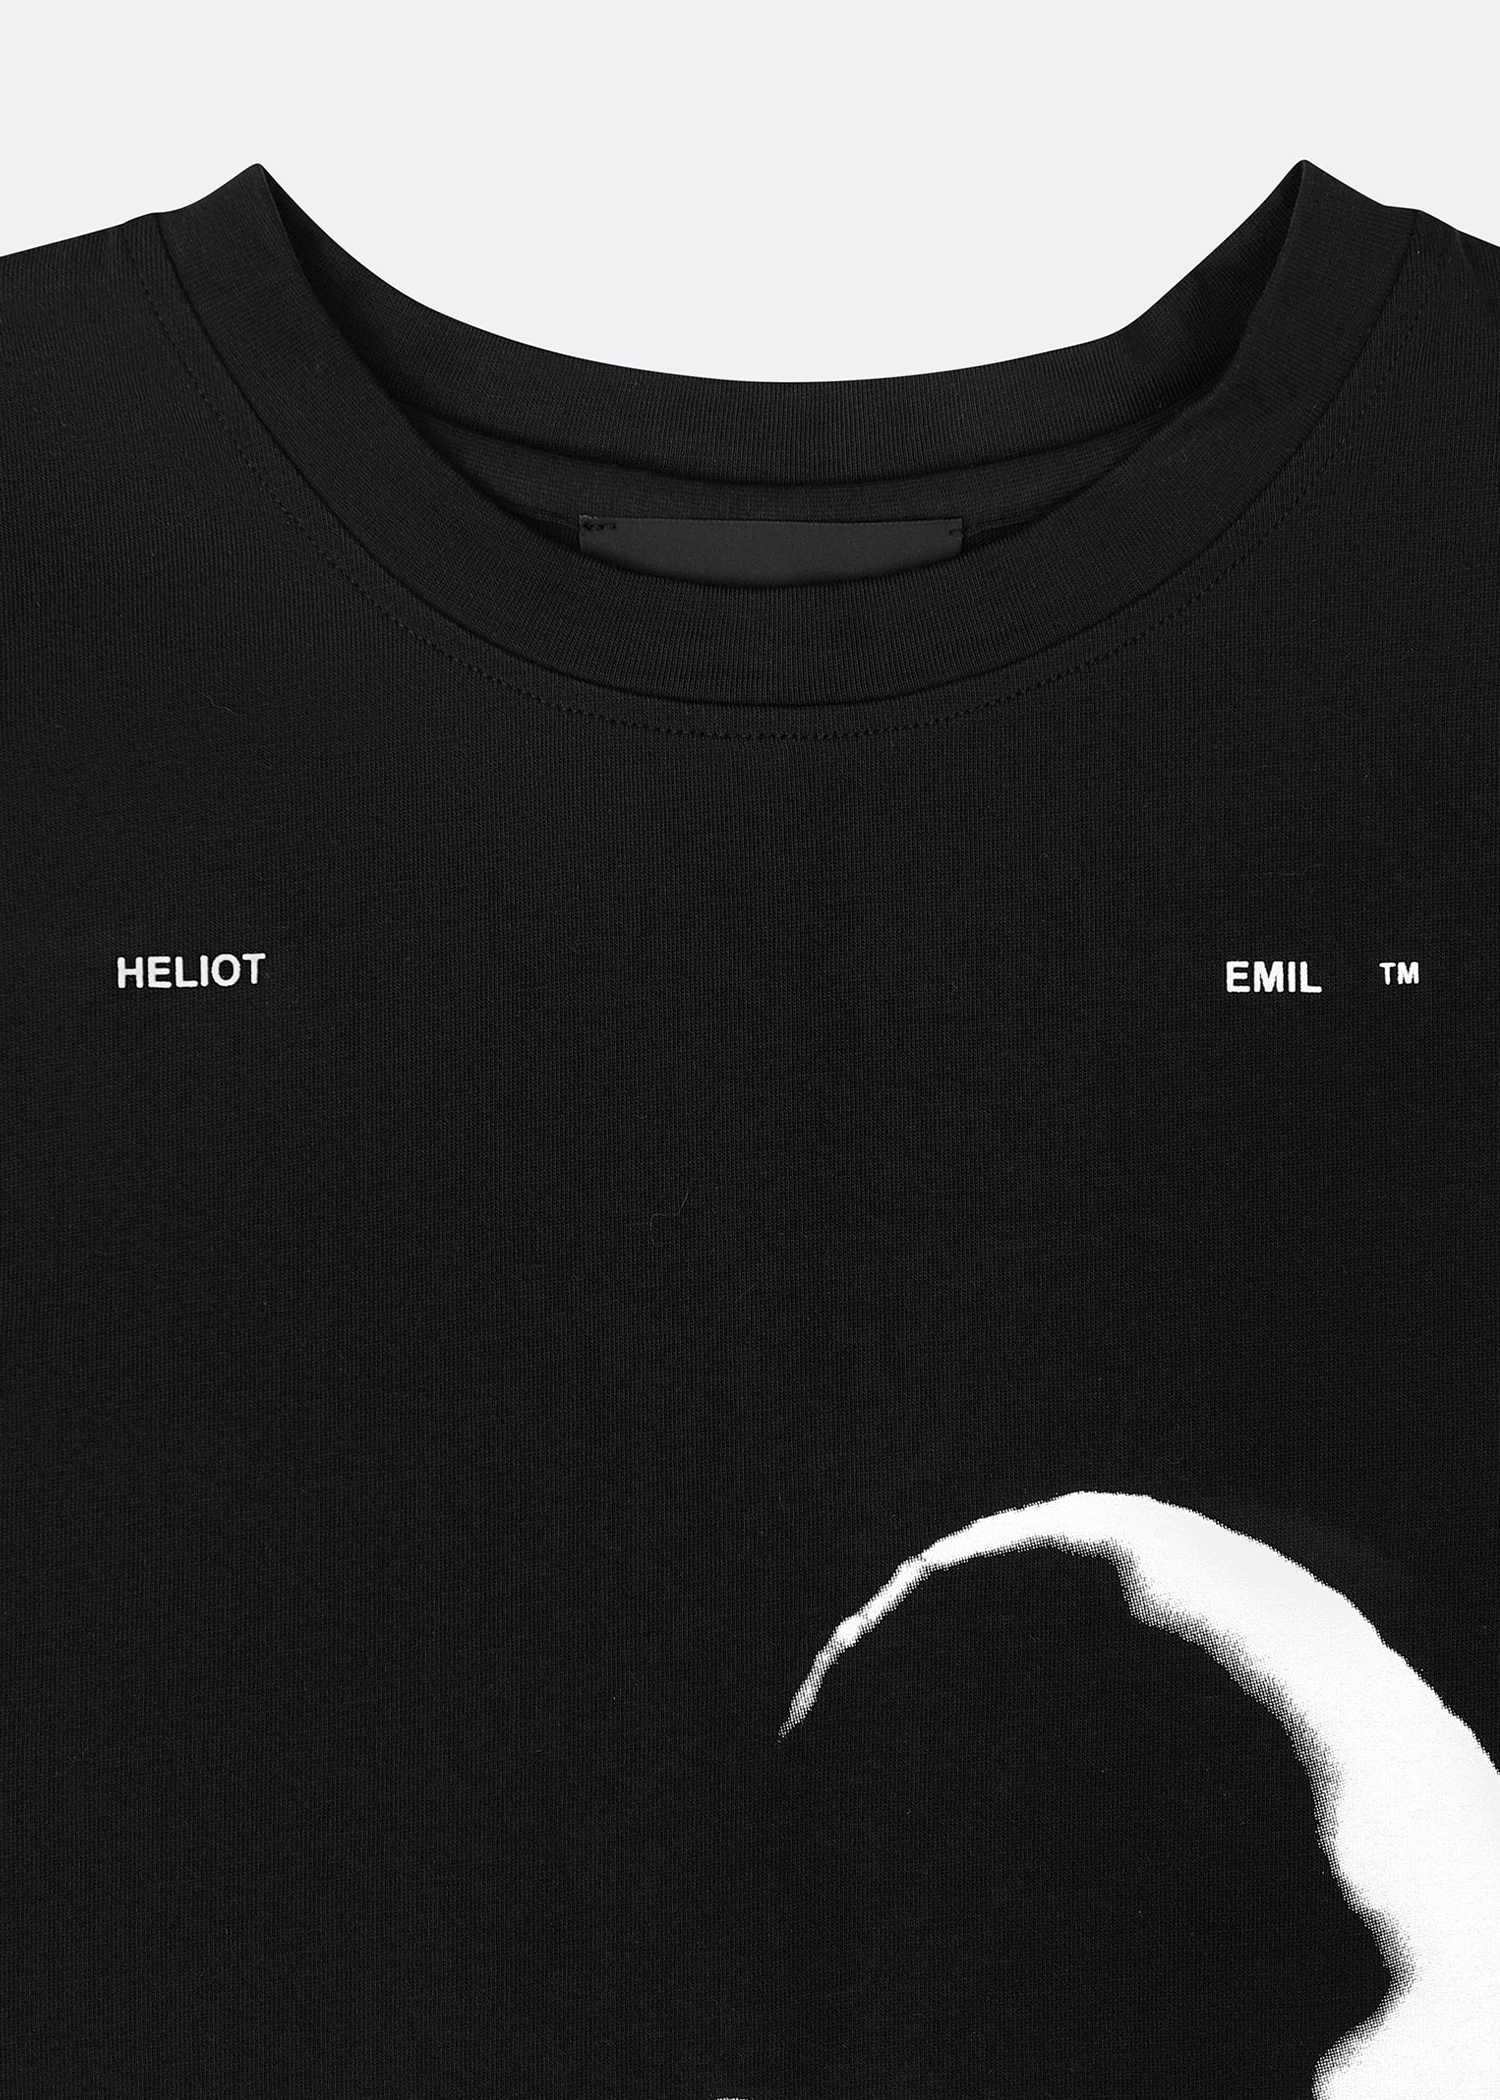 Heliot Emil Ai Generated Print T-Shirt